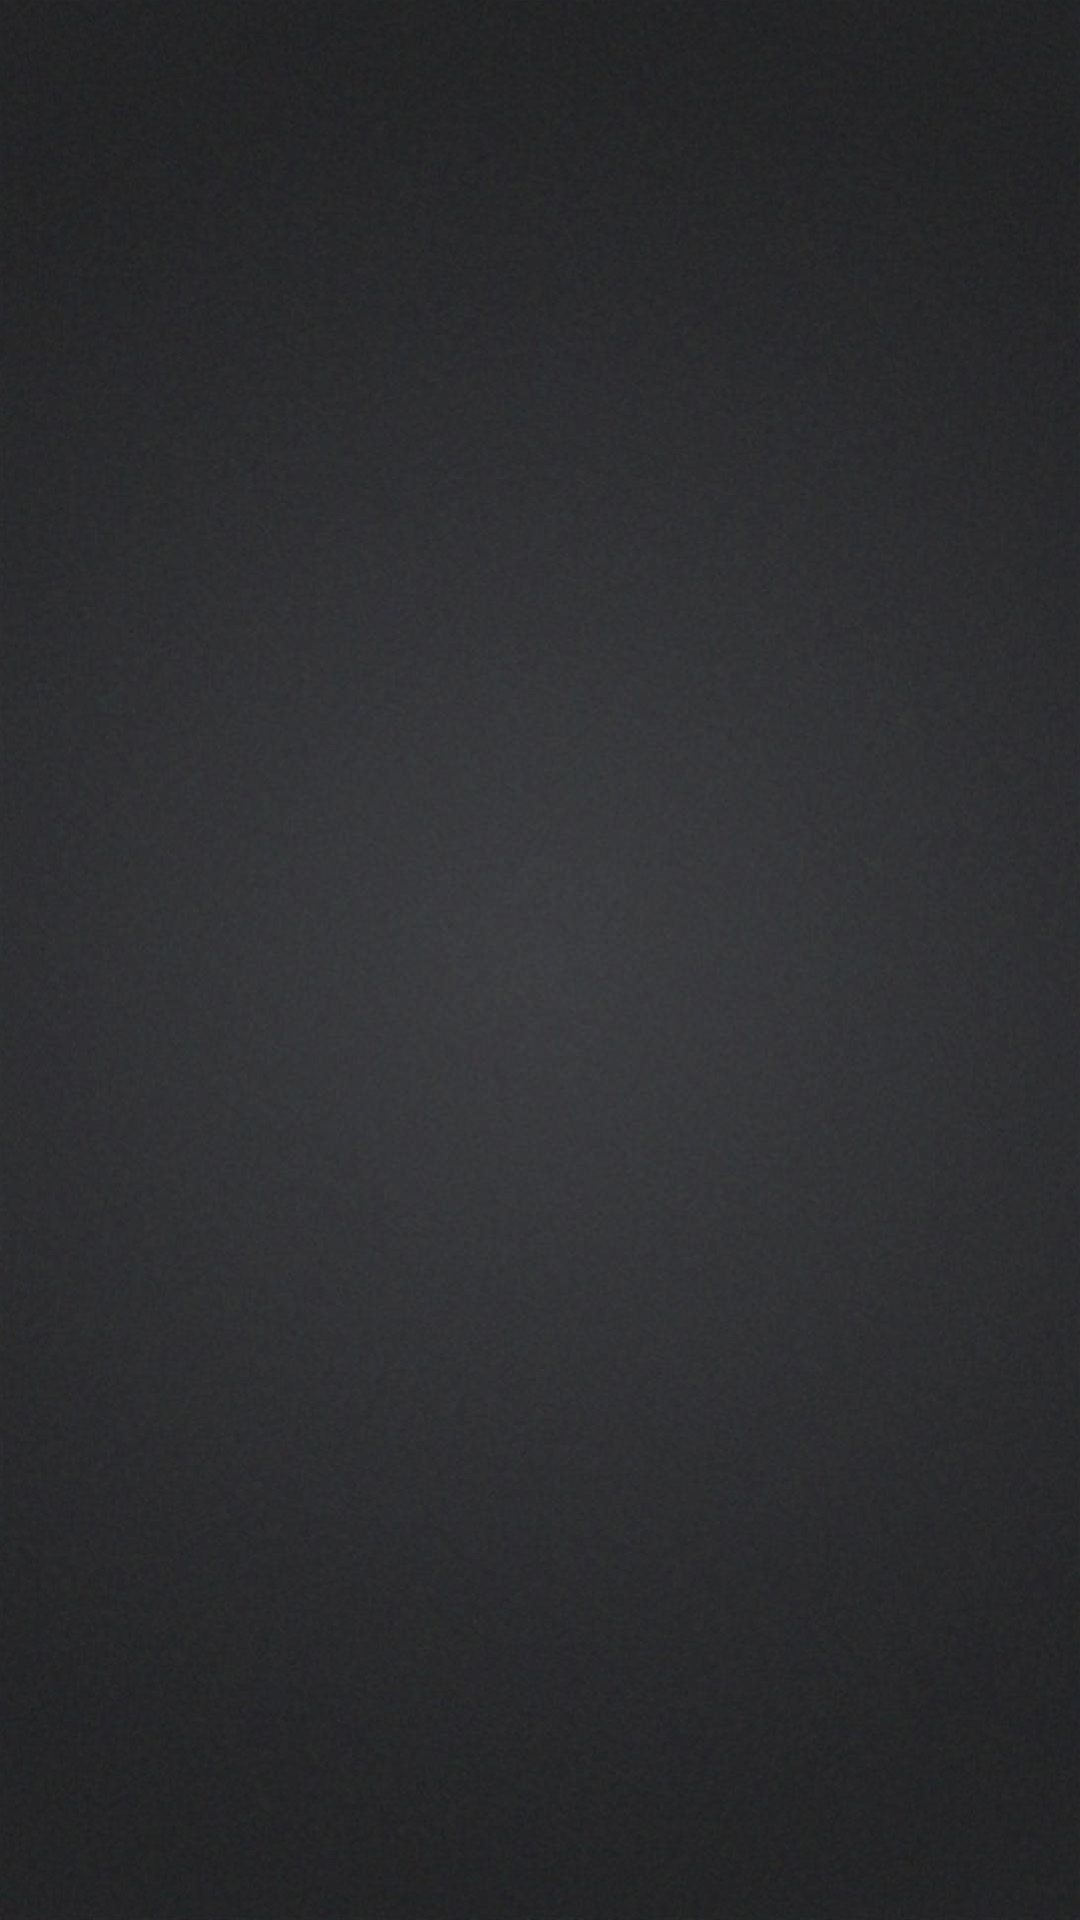 Black Galaxy Note Wallpaper HD